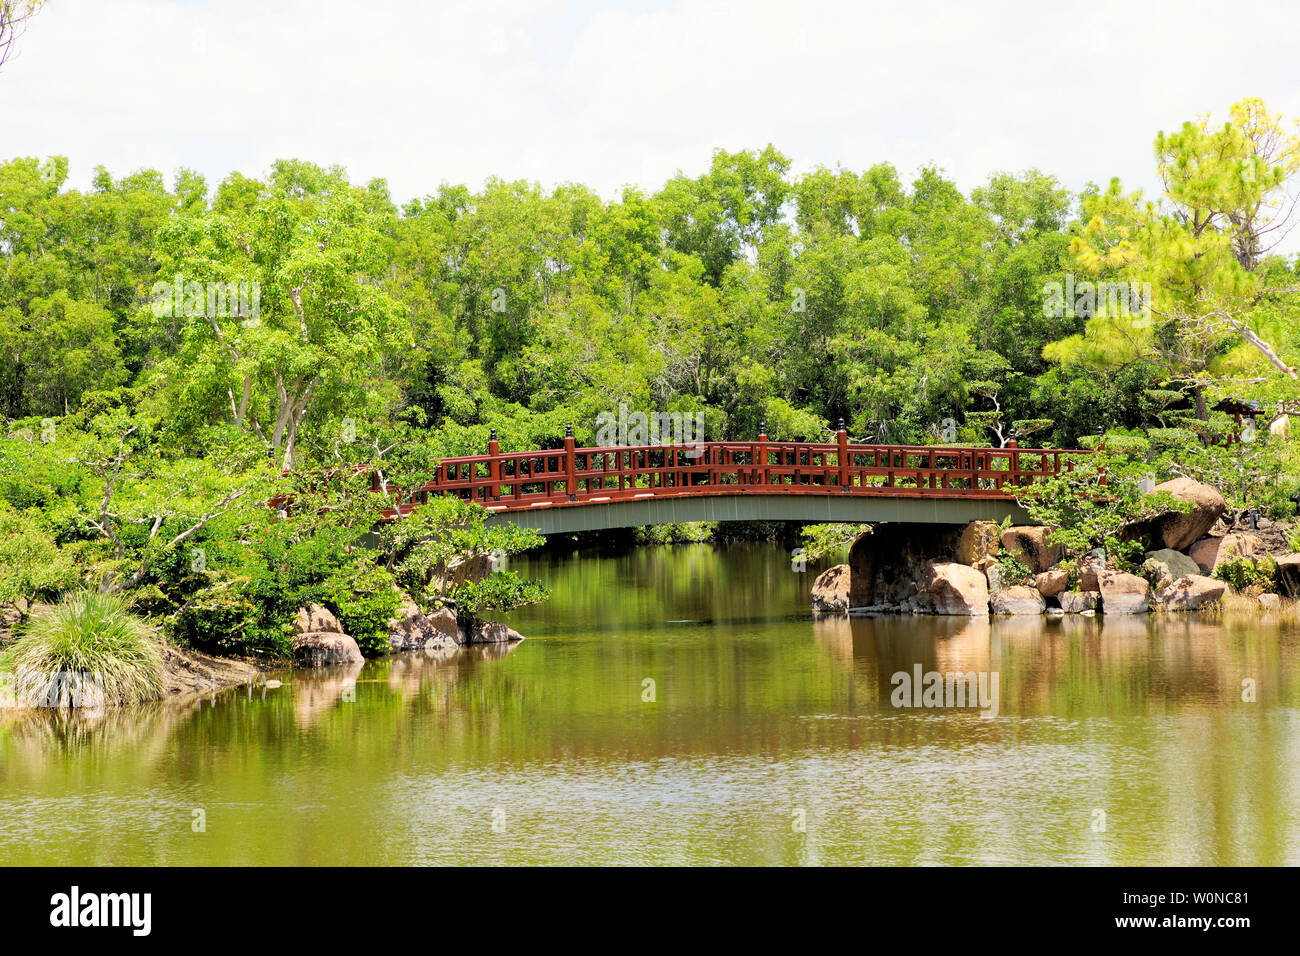 Delray Beach, Florida, Morikami Japanese Botanical Garden, beautiful bridge, waterfall and walkway along the lake among a lush foliage backdrop Stock Photo